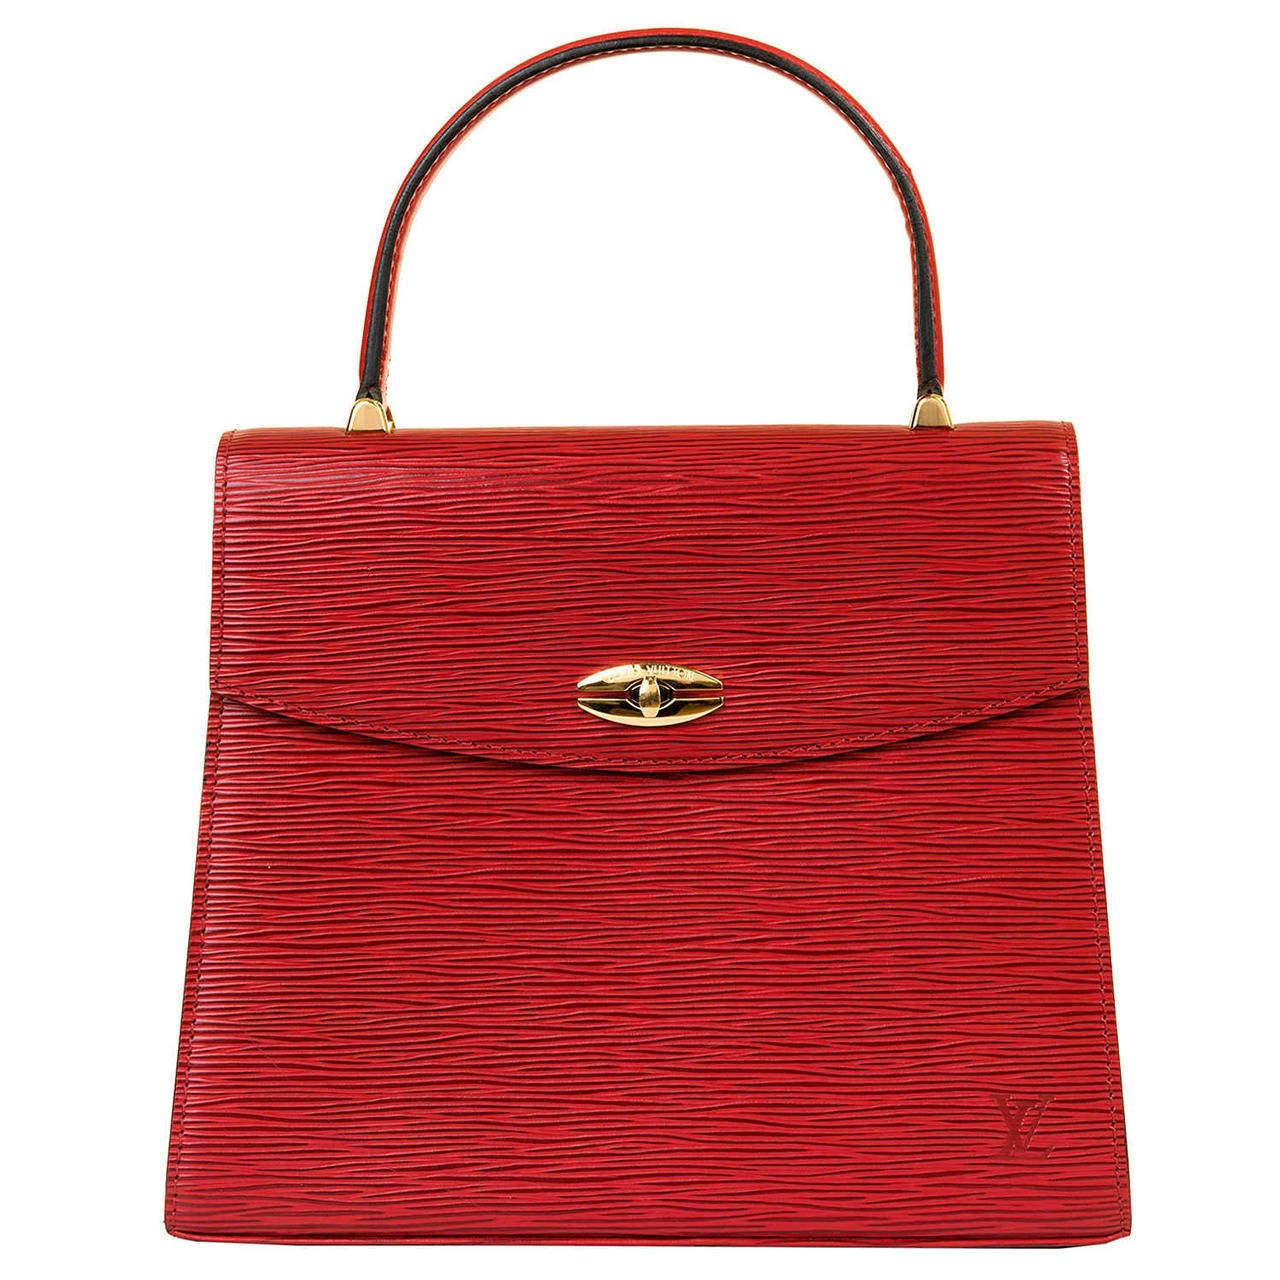 'Très Chic' Louis Vuitton 'Sac Malsherbes' in Red Epi Leather & Gold Hardware